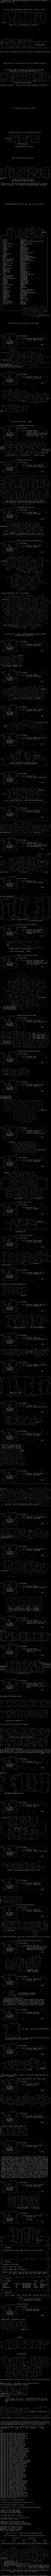 The Kingpin ASCII Collection by Megga Hertz